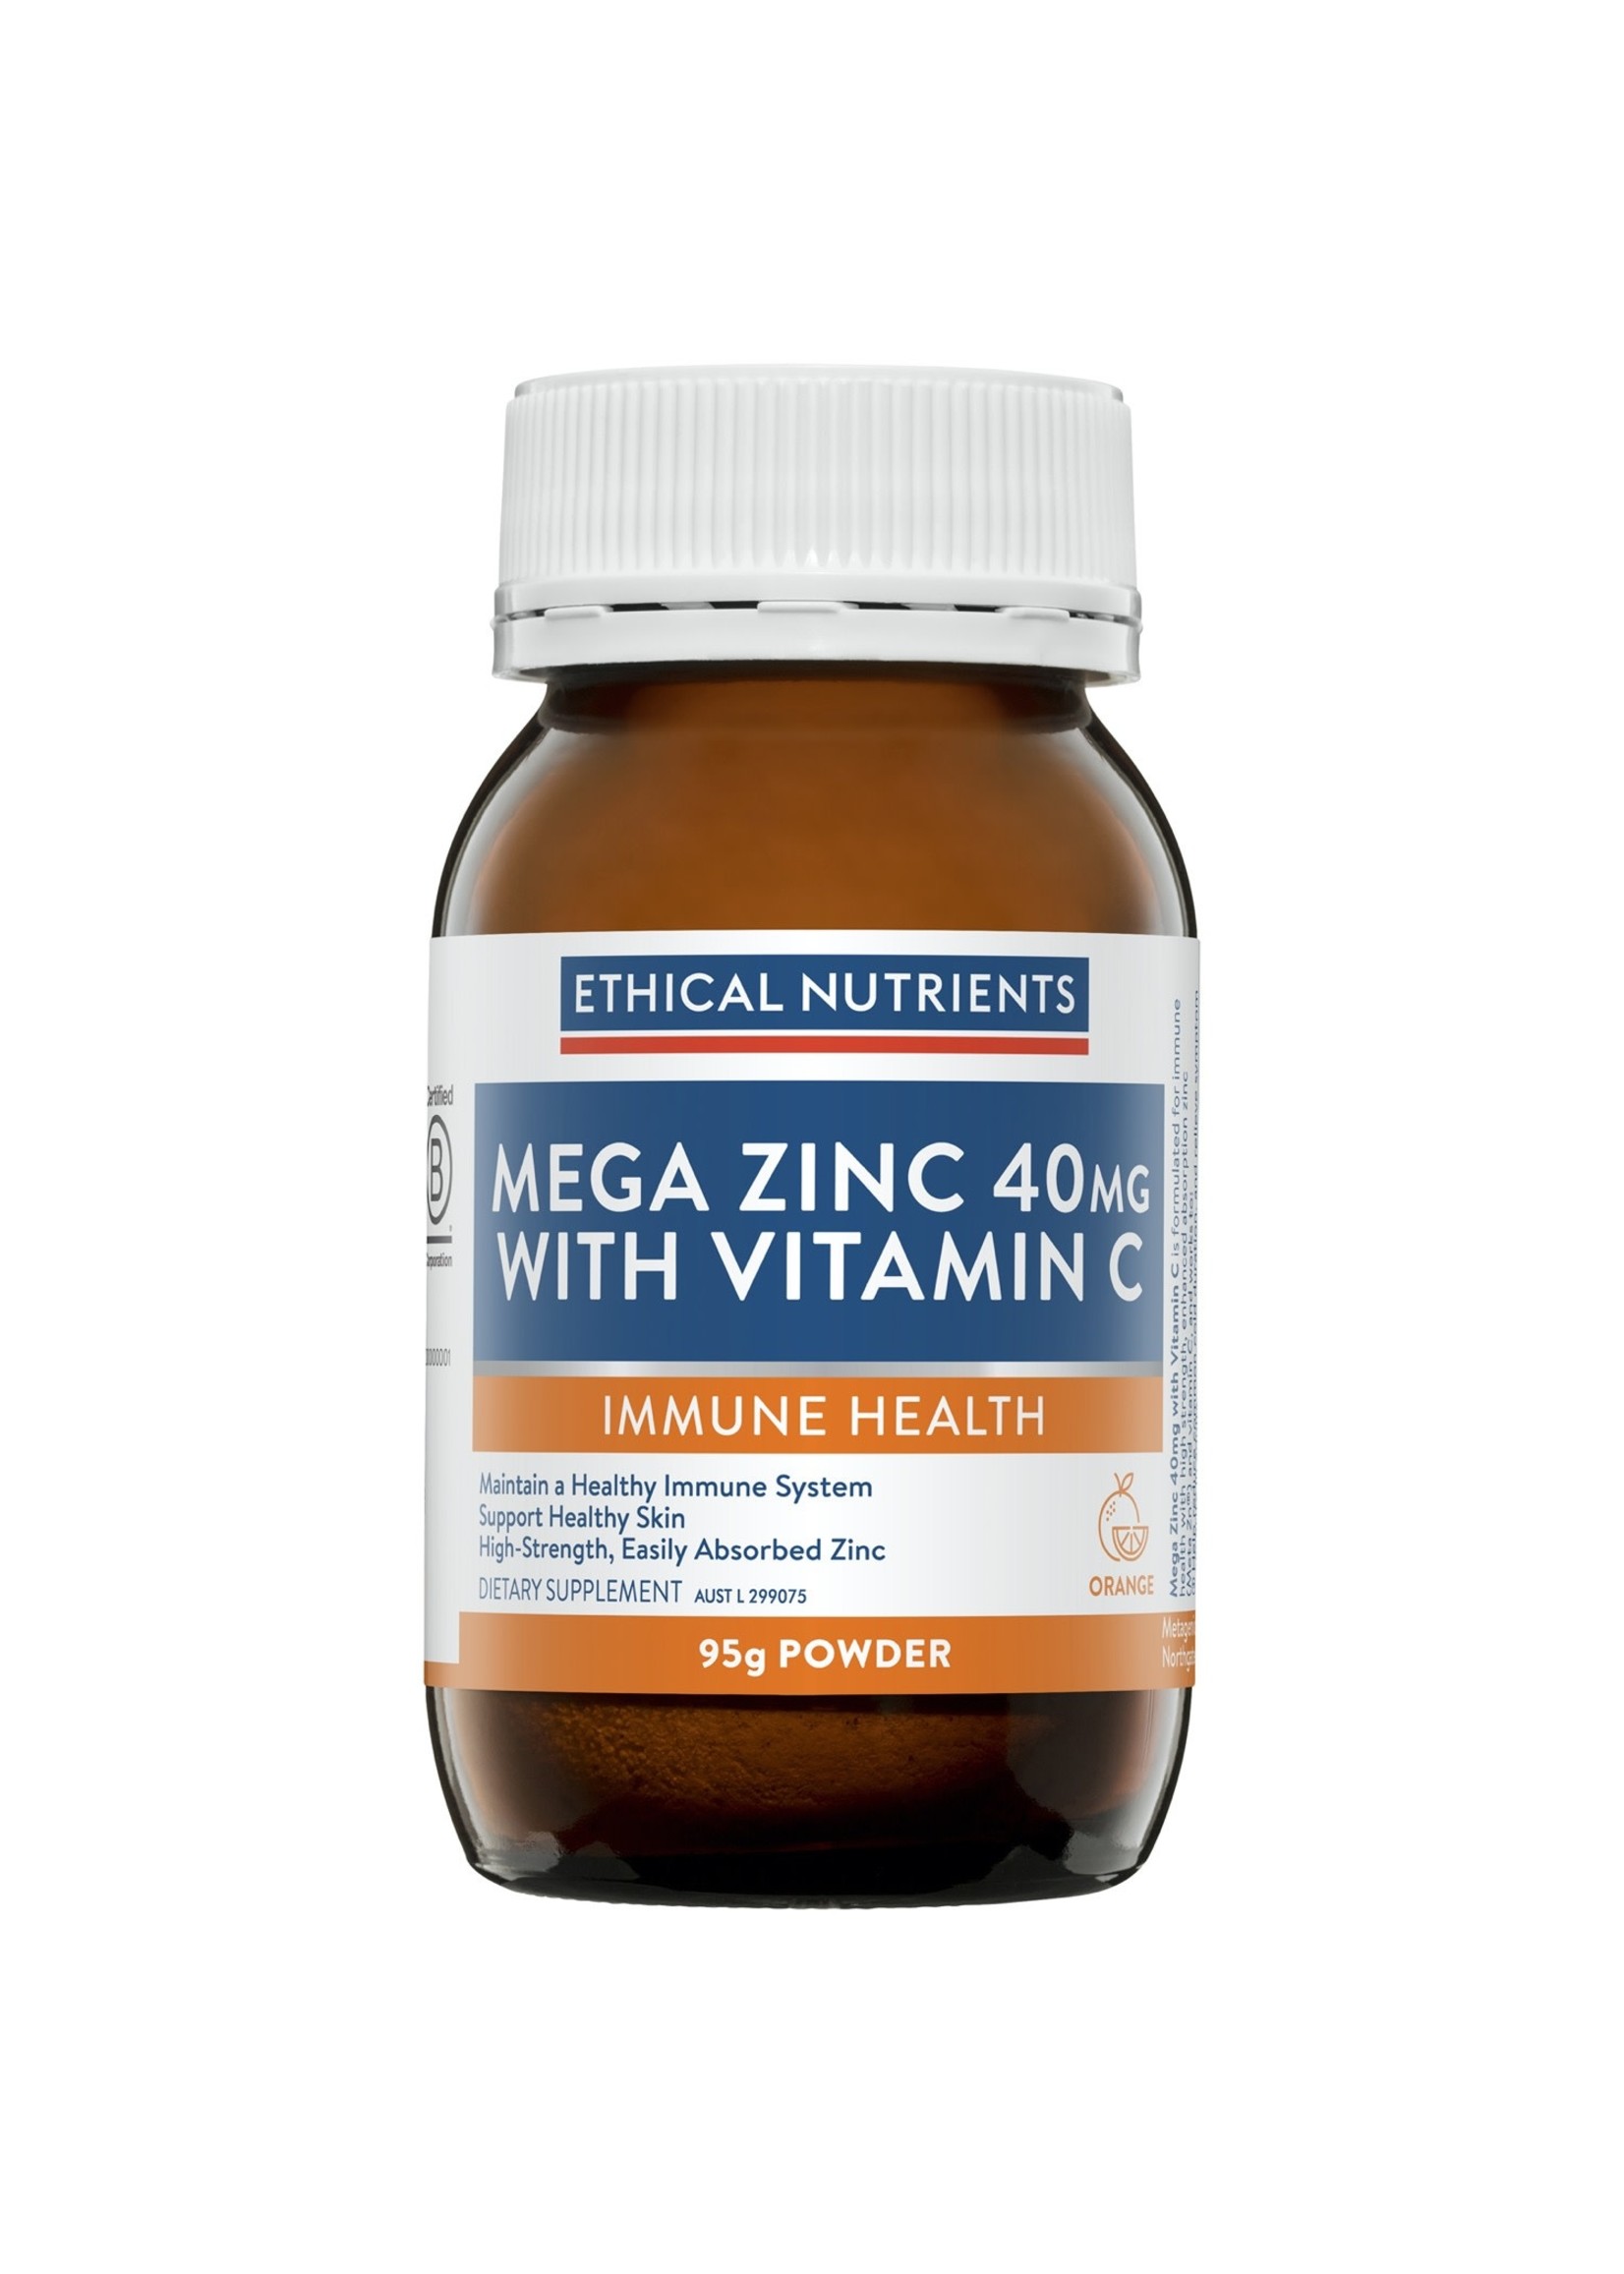 ETHICAL NUTRIENTS Ethical Nutrients Mega Zinc Powder Orange 95g